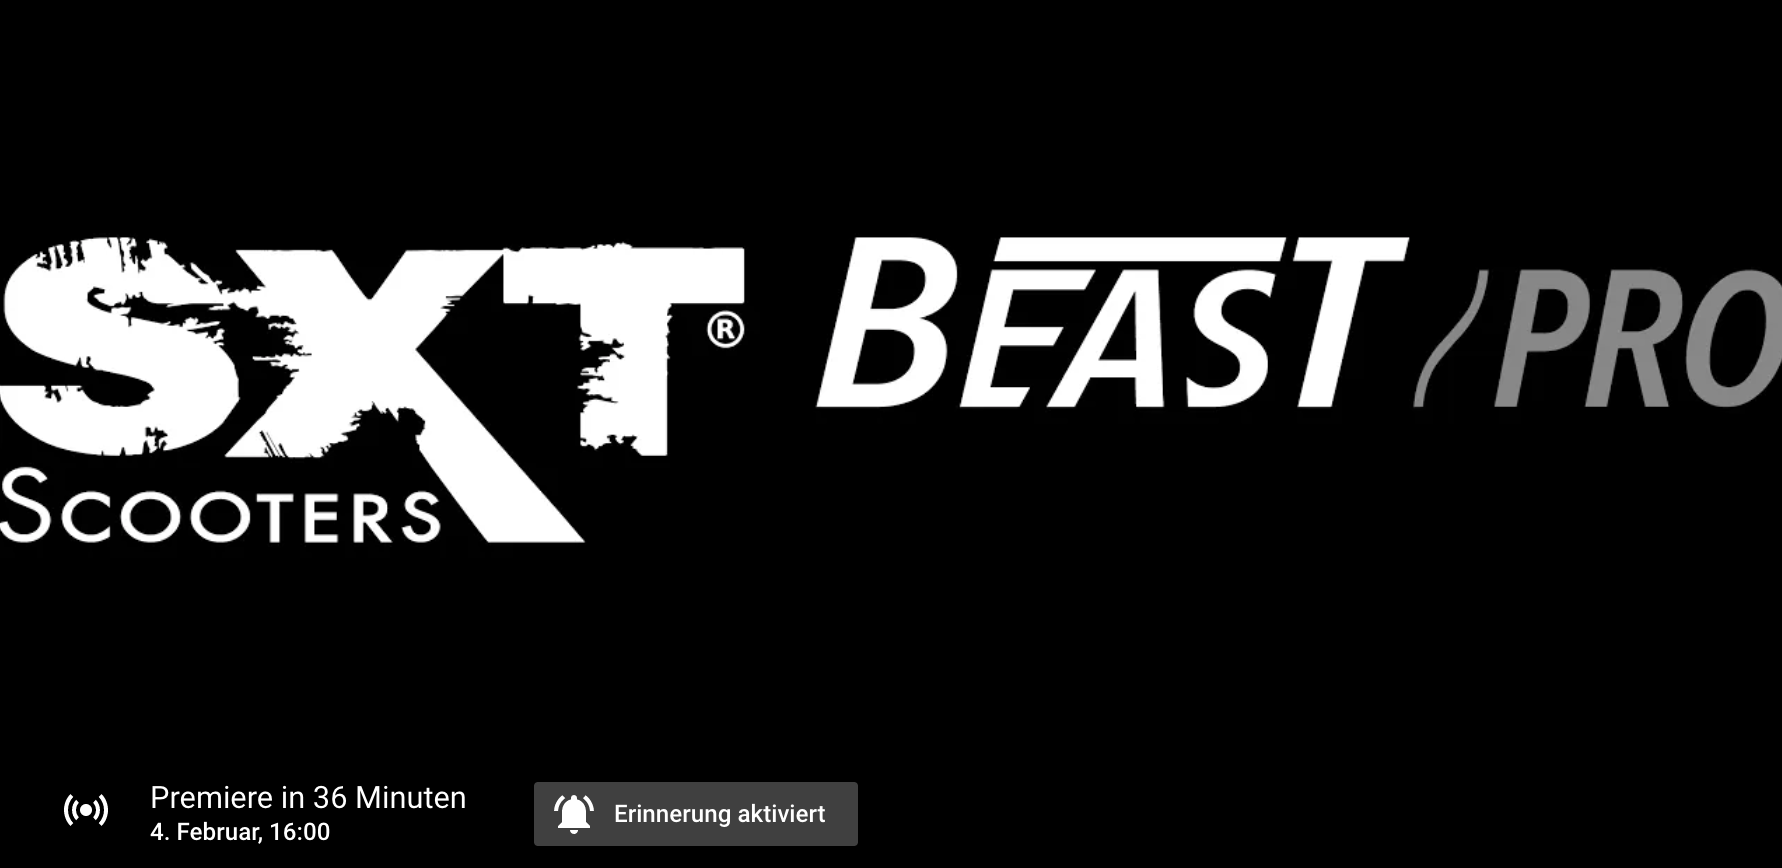 SXT Beast Pro